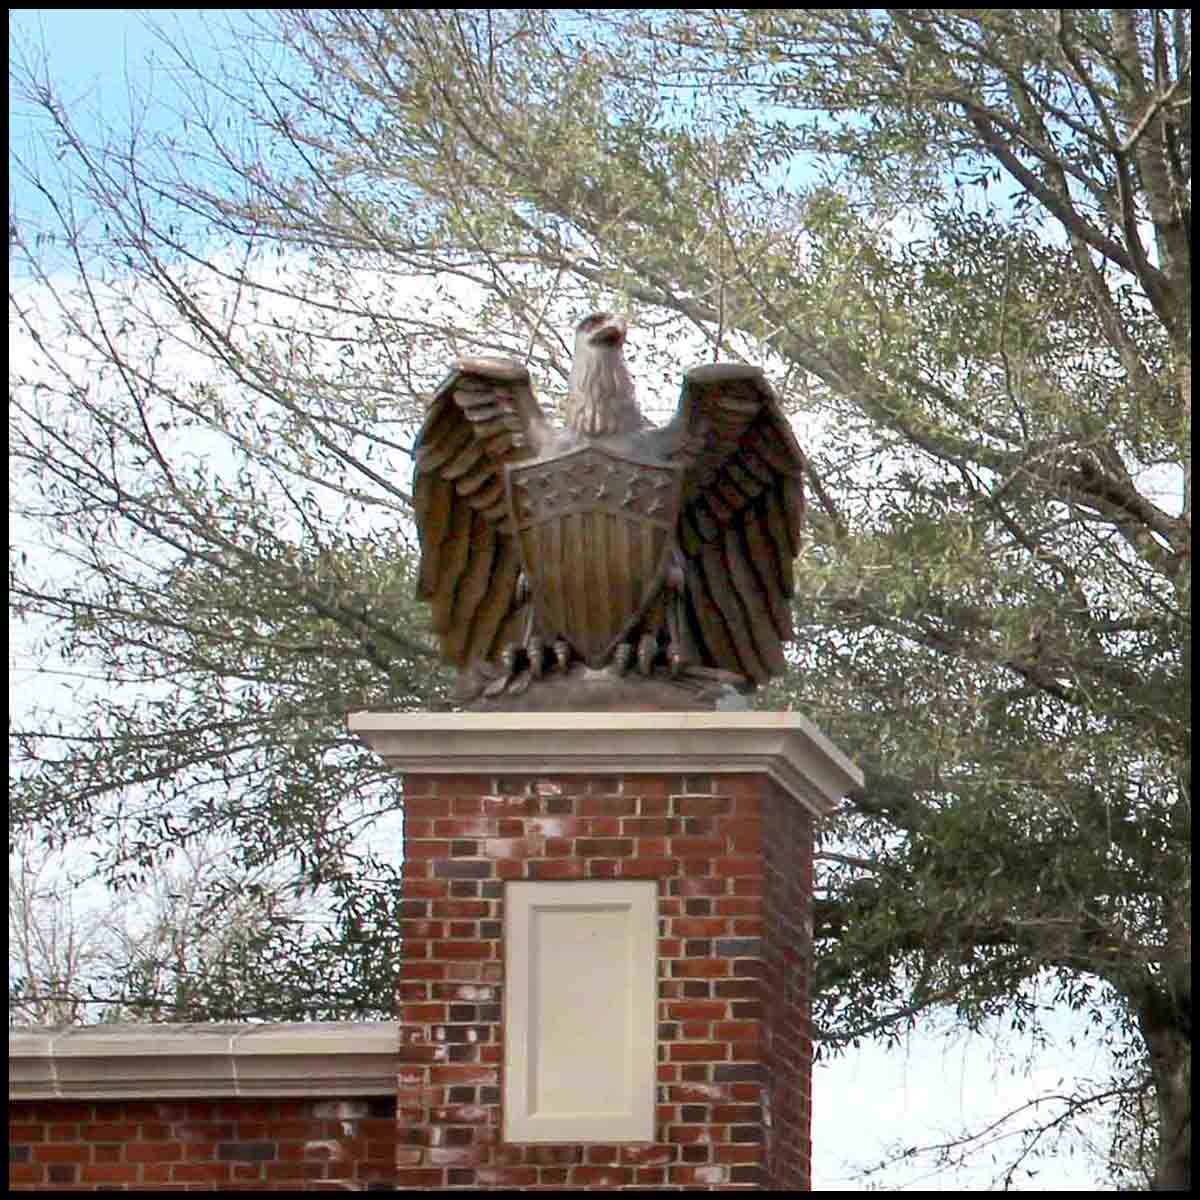 photo of bronze eagle sculpture atop brick gateway post